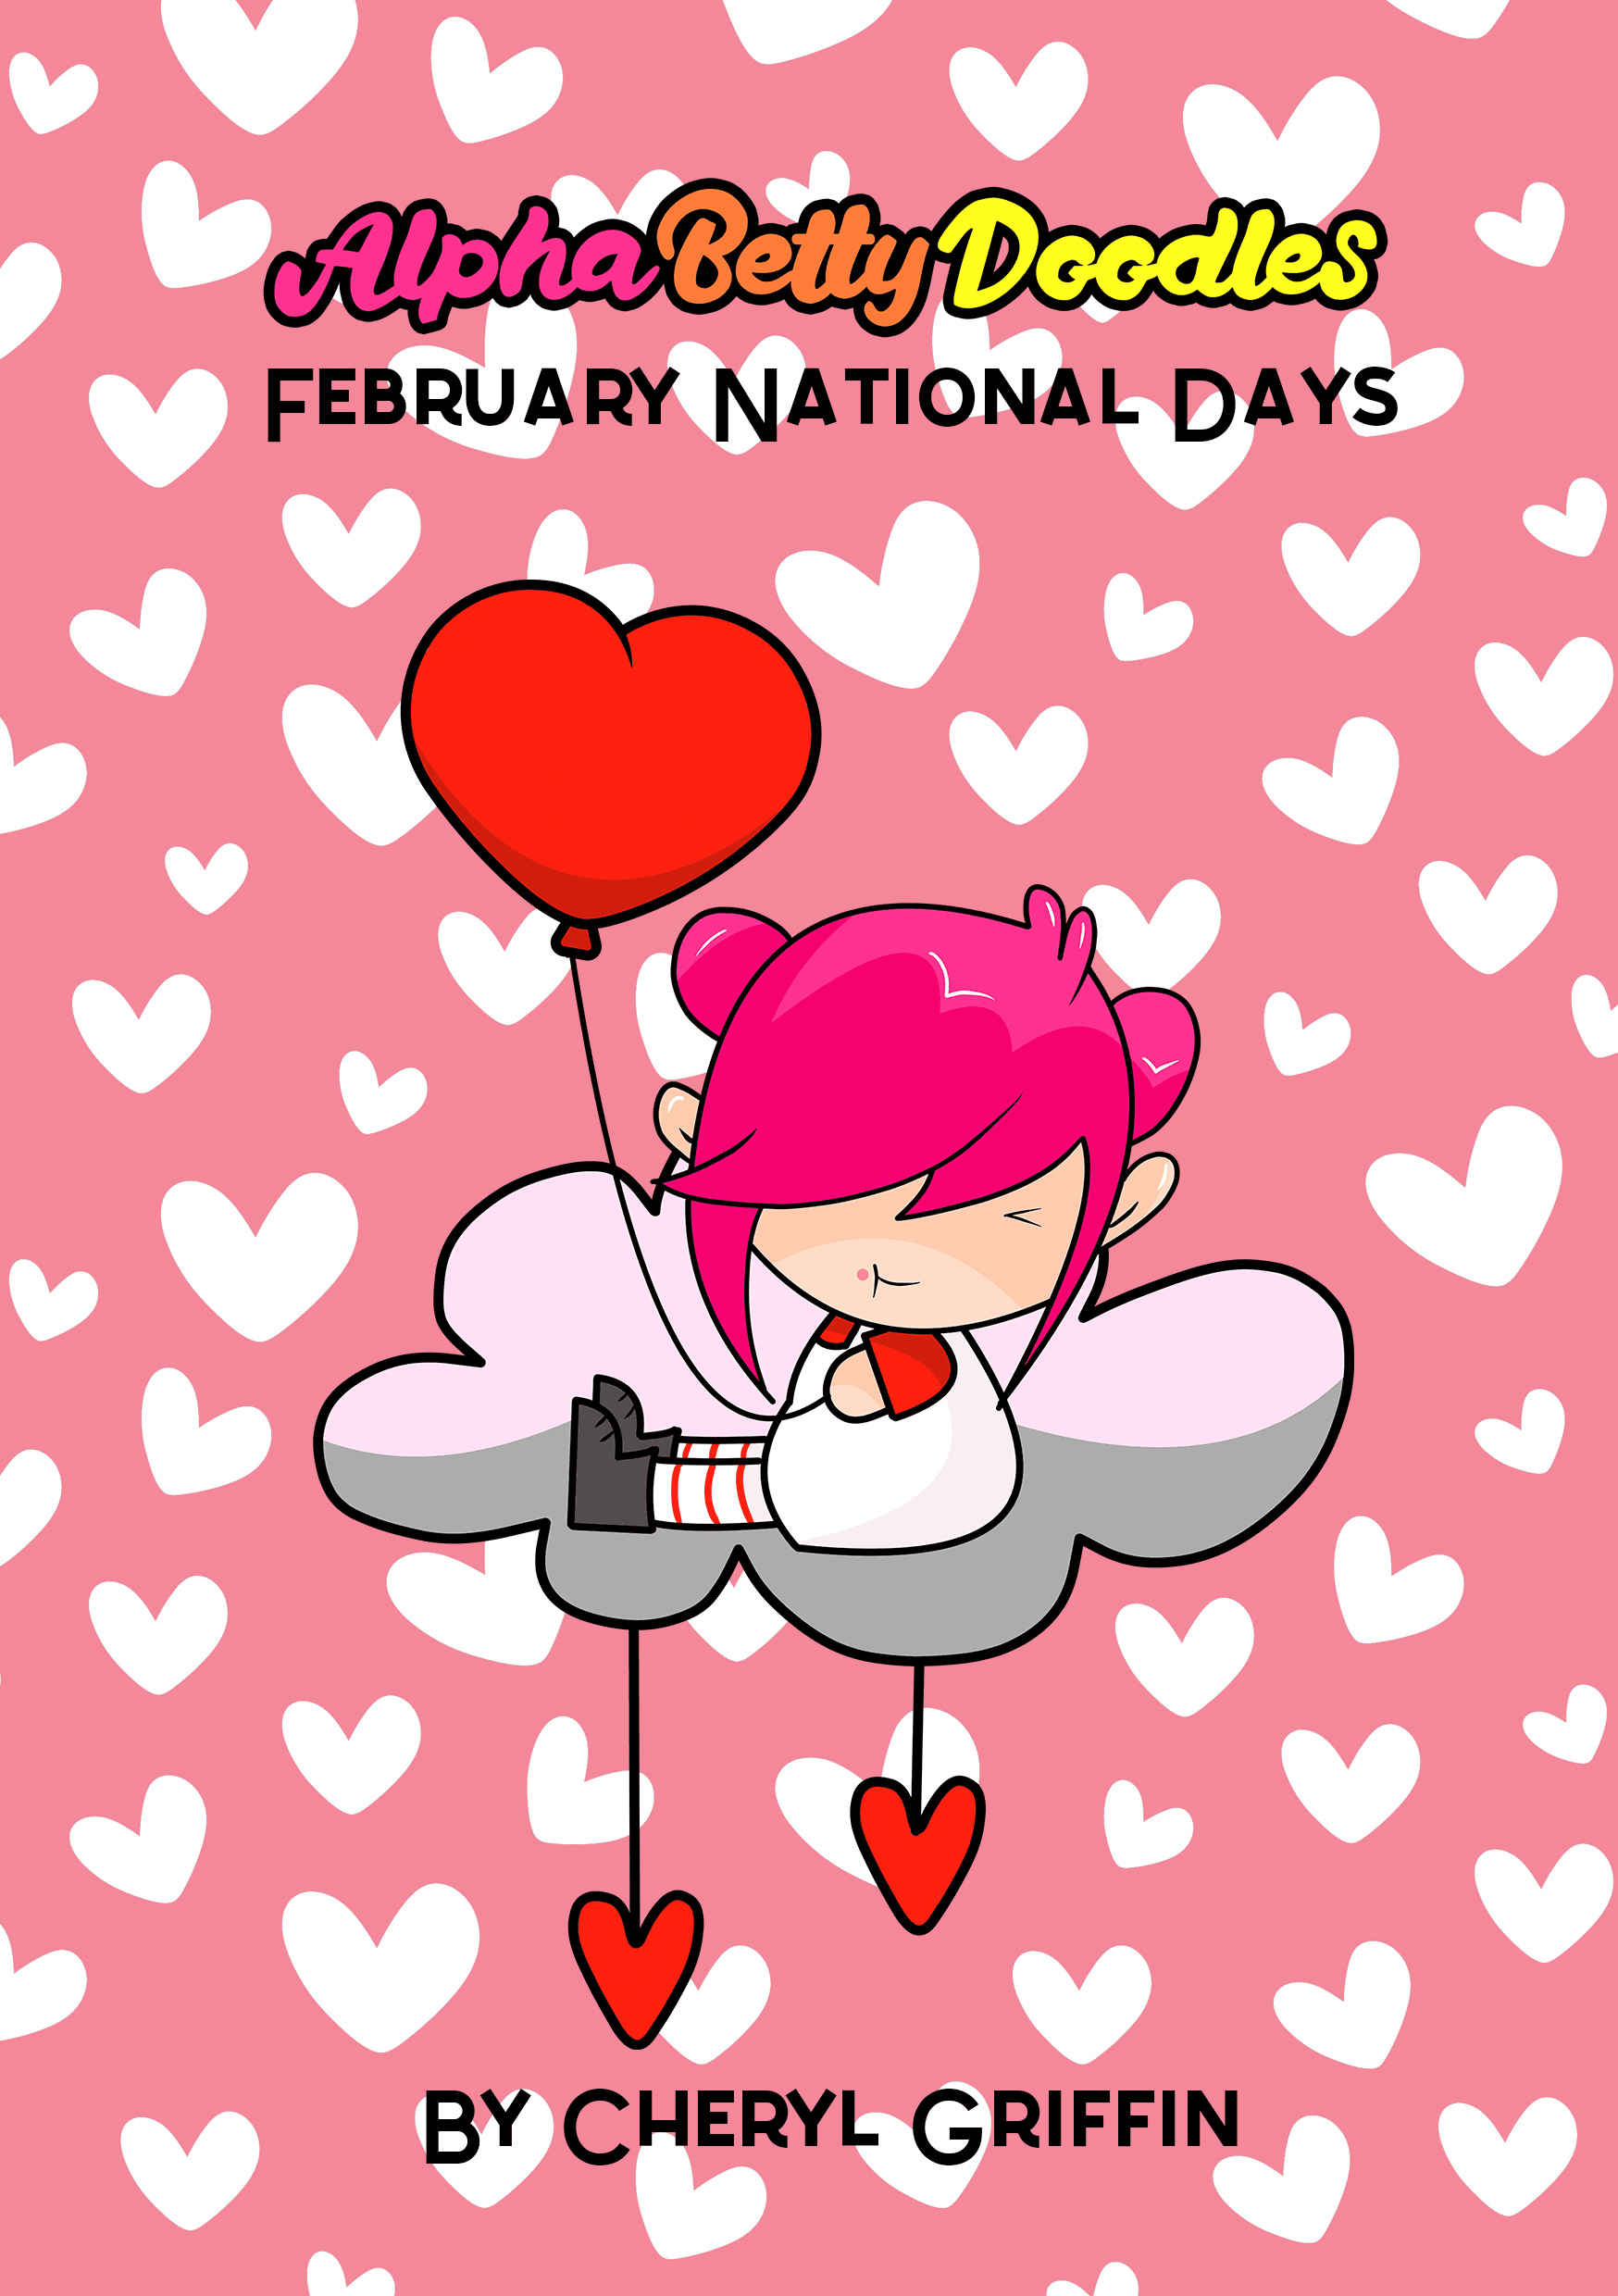 AlphaBetty Doodles National Days - February